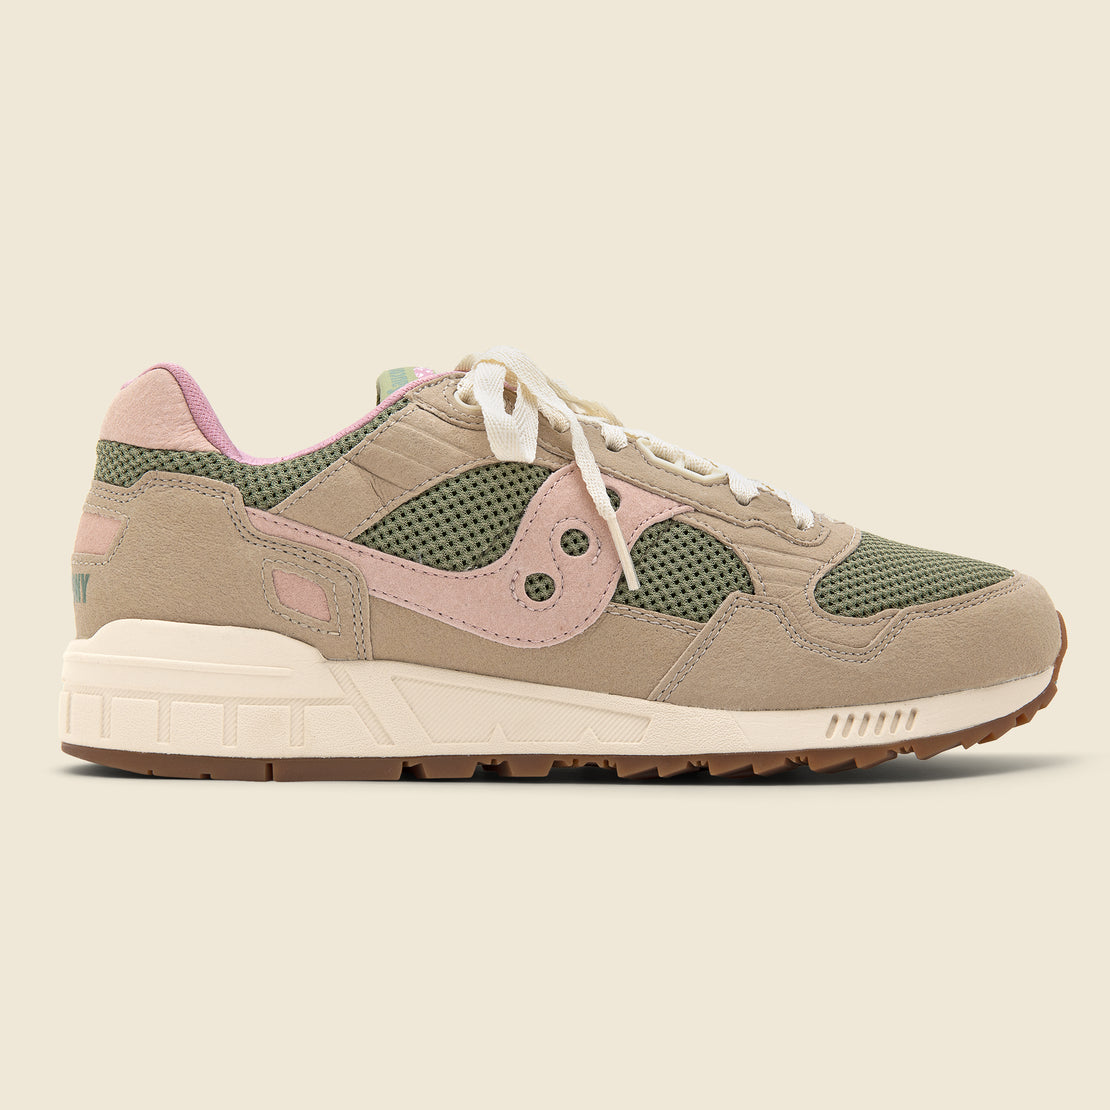 Saucony Shadow 5000 Mushroom Sneaker - Tan/Green/Pink